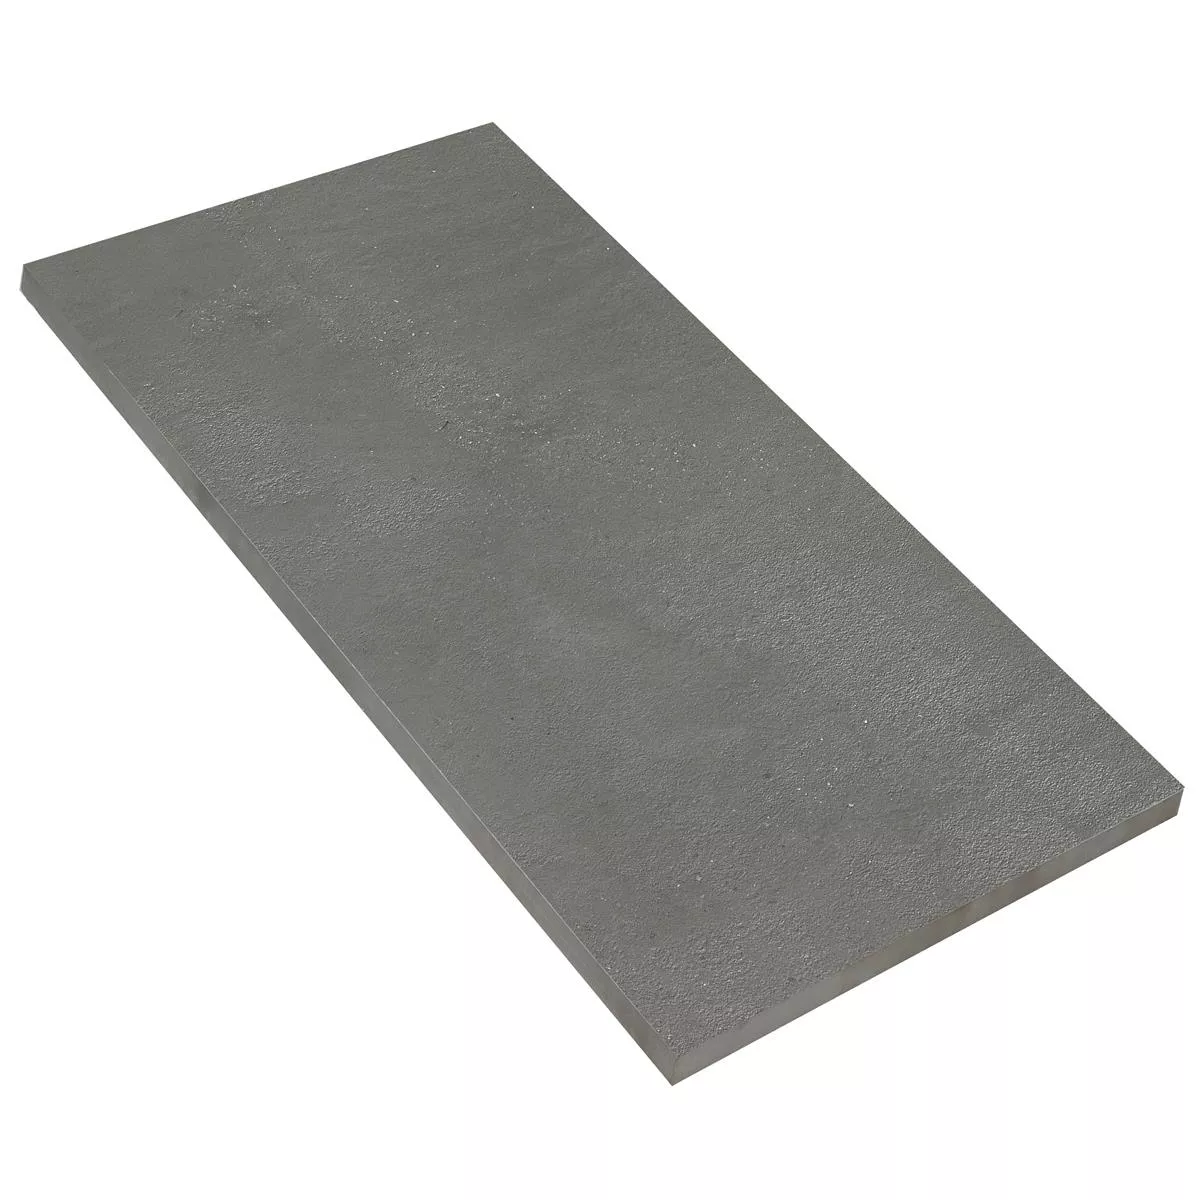 Sample Floor Tiles Malibu Beton Optic Grey 60x120cm